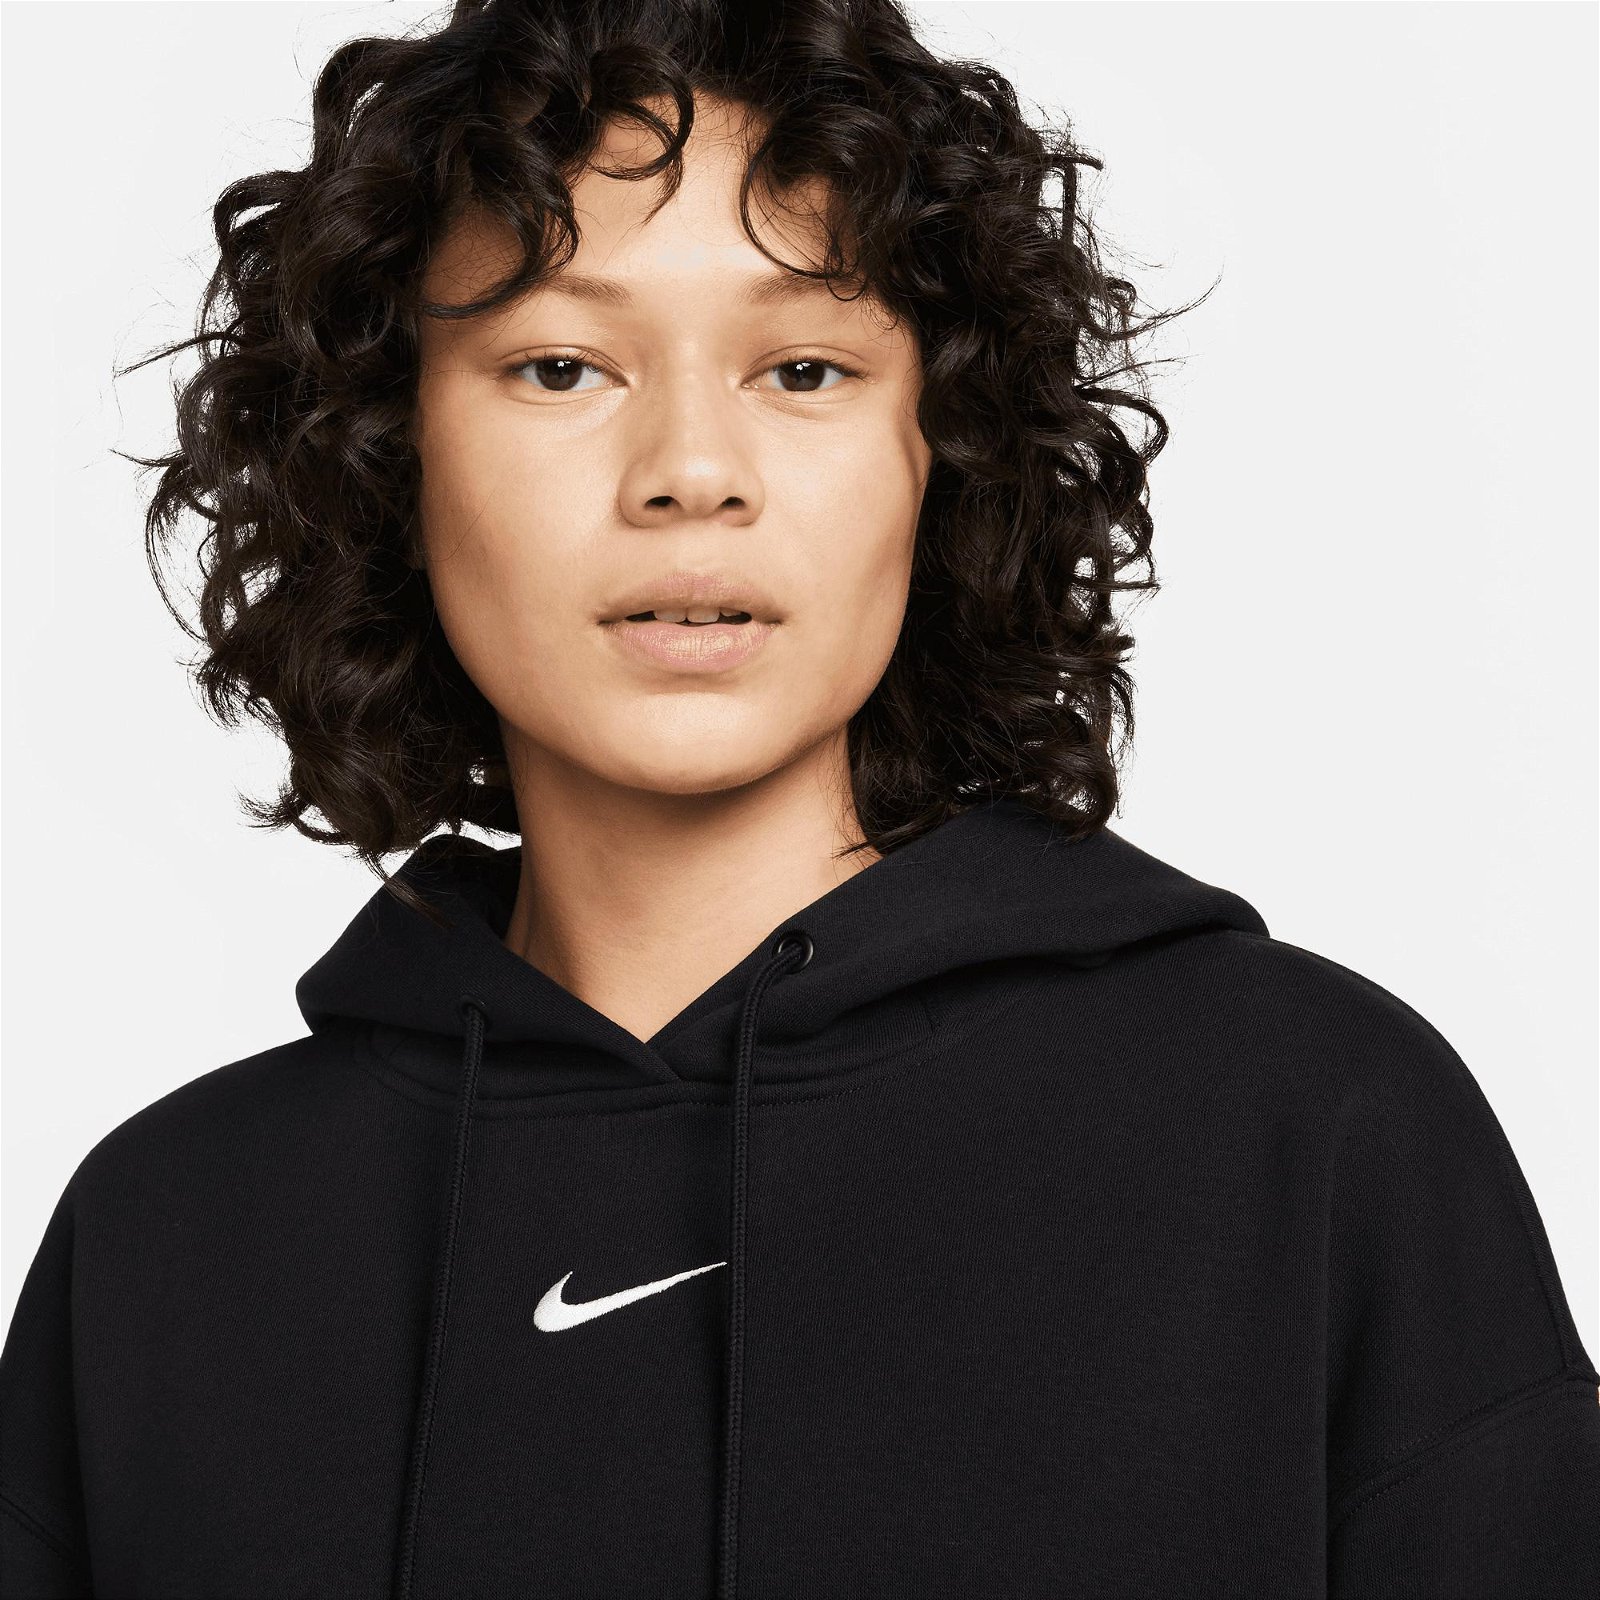 Nike Sportswear Phnx Fleece Os Po Hoodie Kadın Siyah Sweatshirt